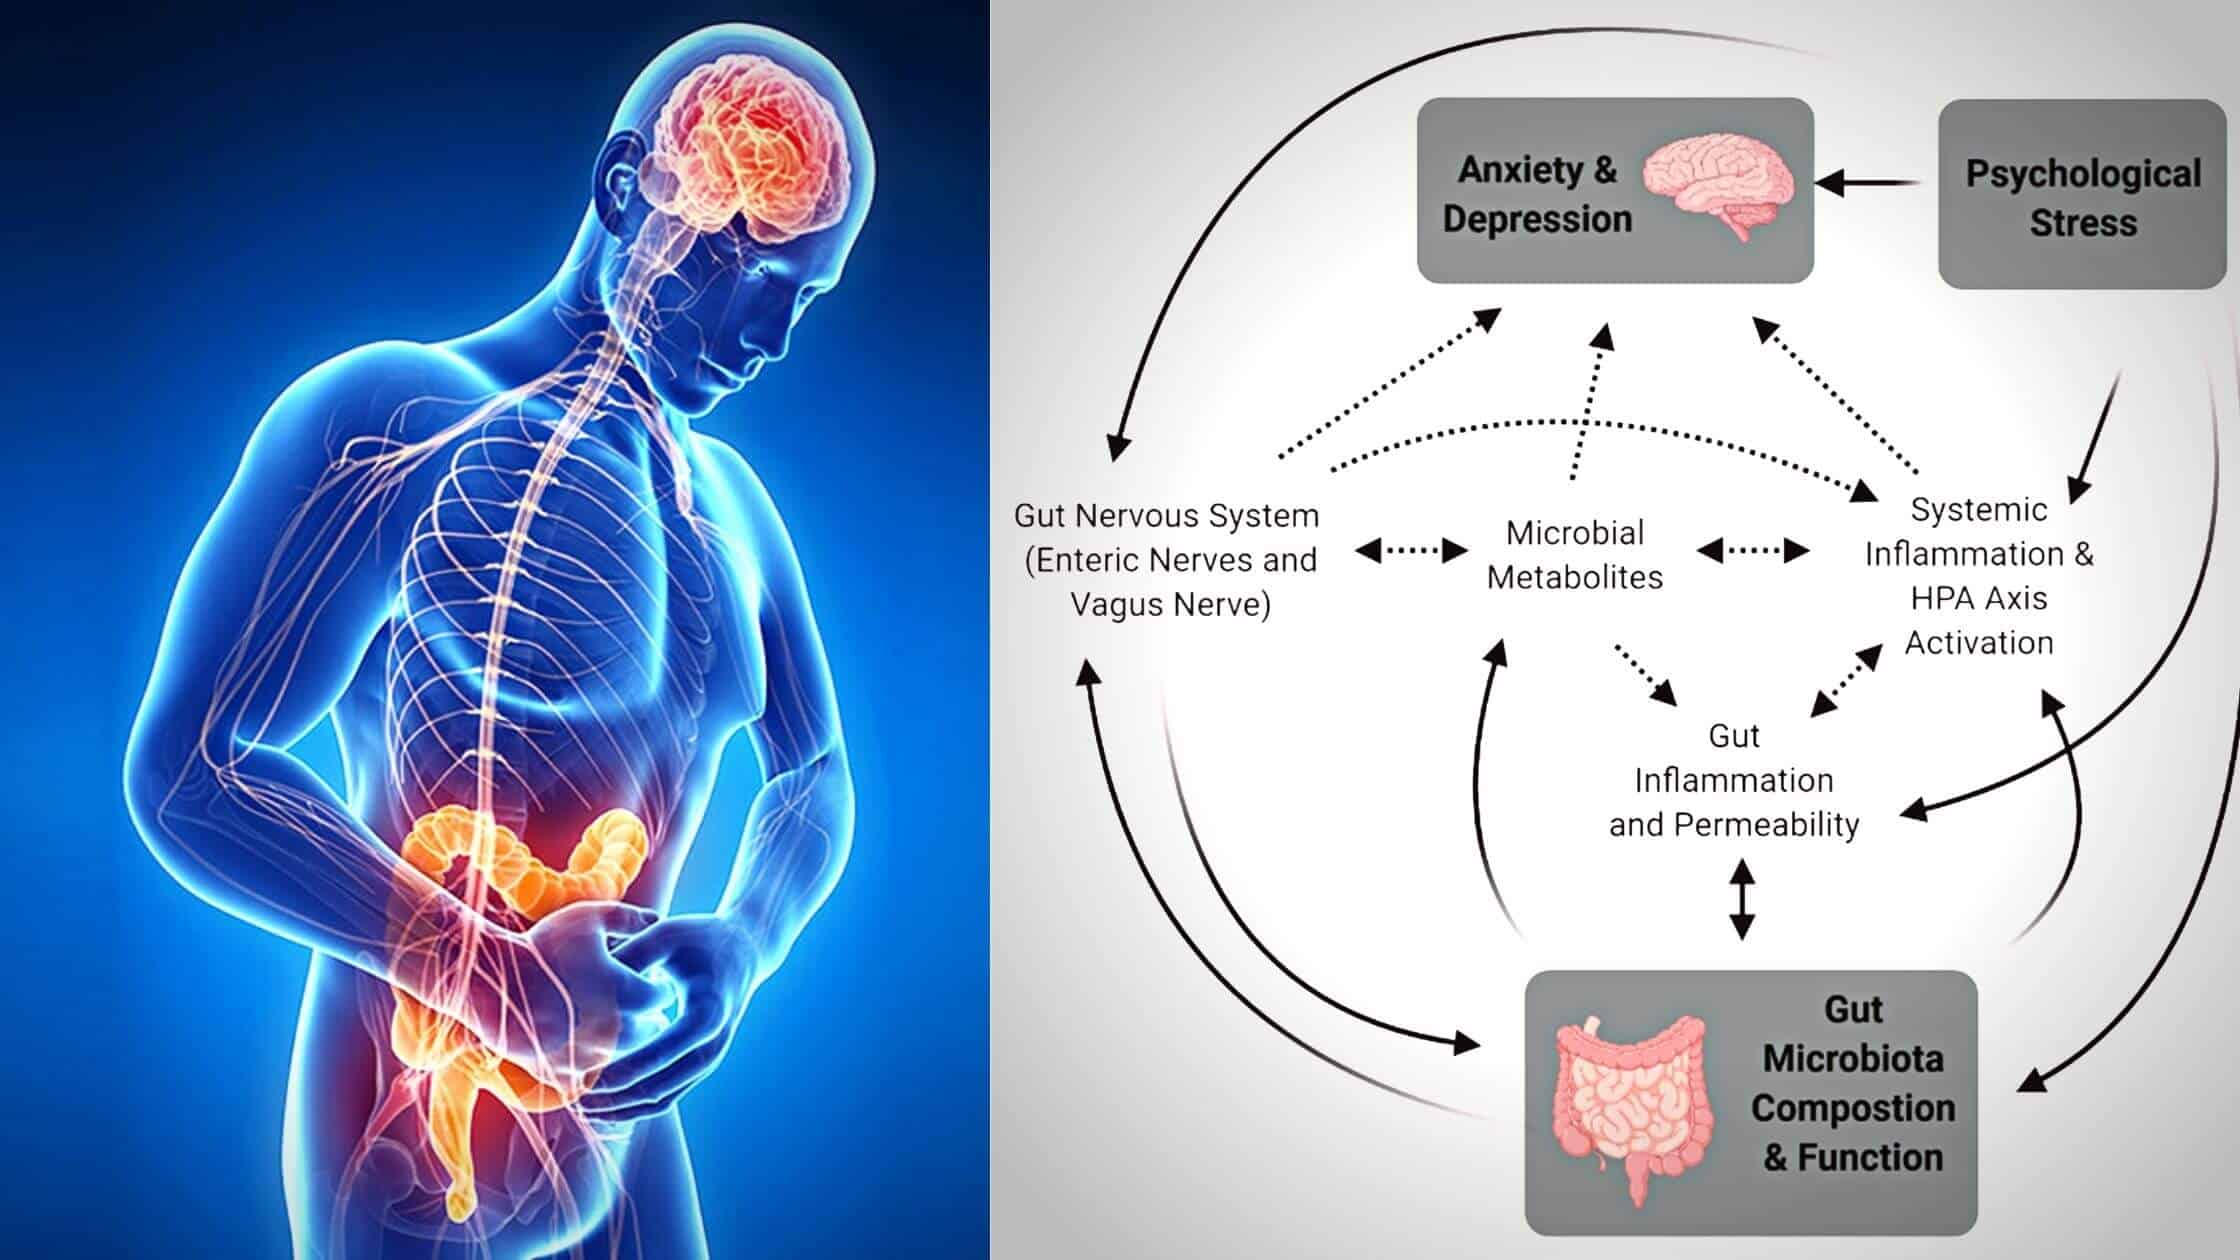 Depressive Symptoms Are Linked To The Gut Microbiota: A Study Found